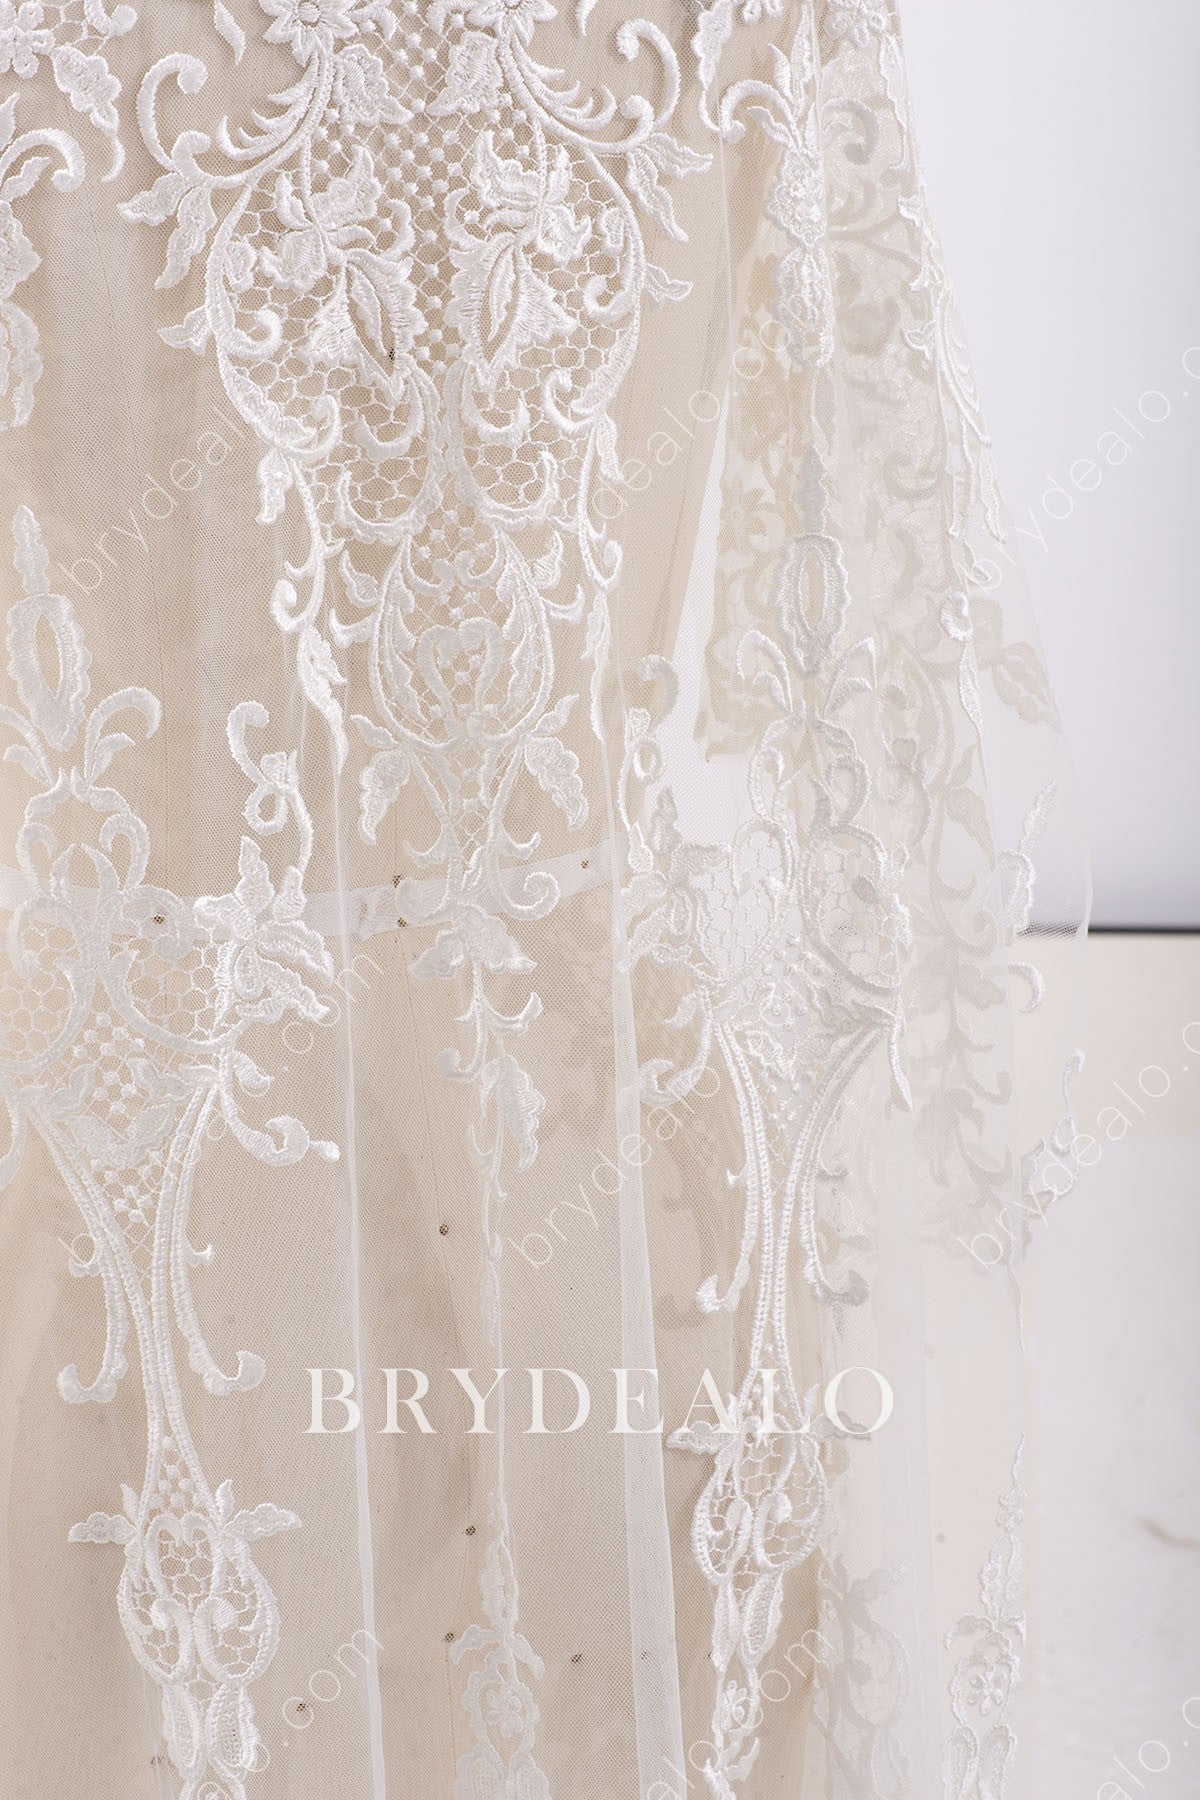 Best Beautiful Flower Cording Bridal Lace Fabric